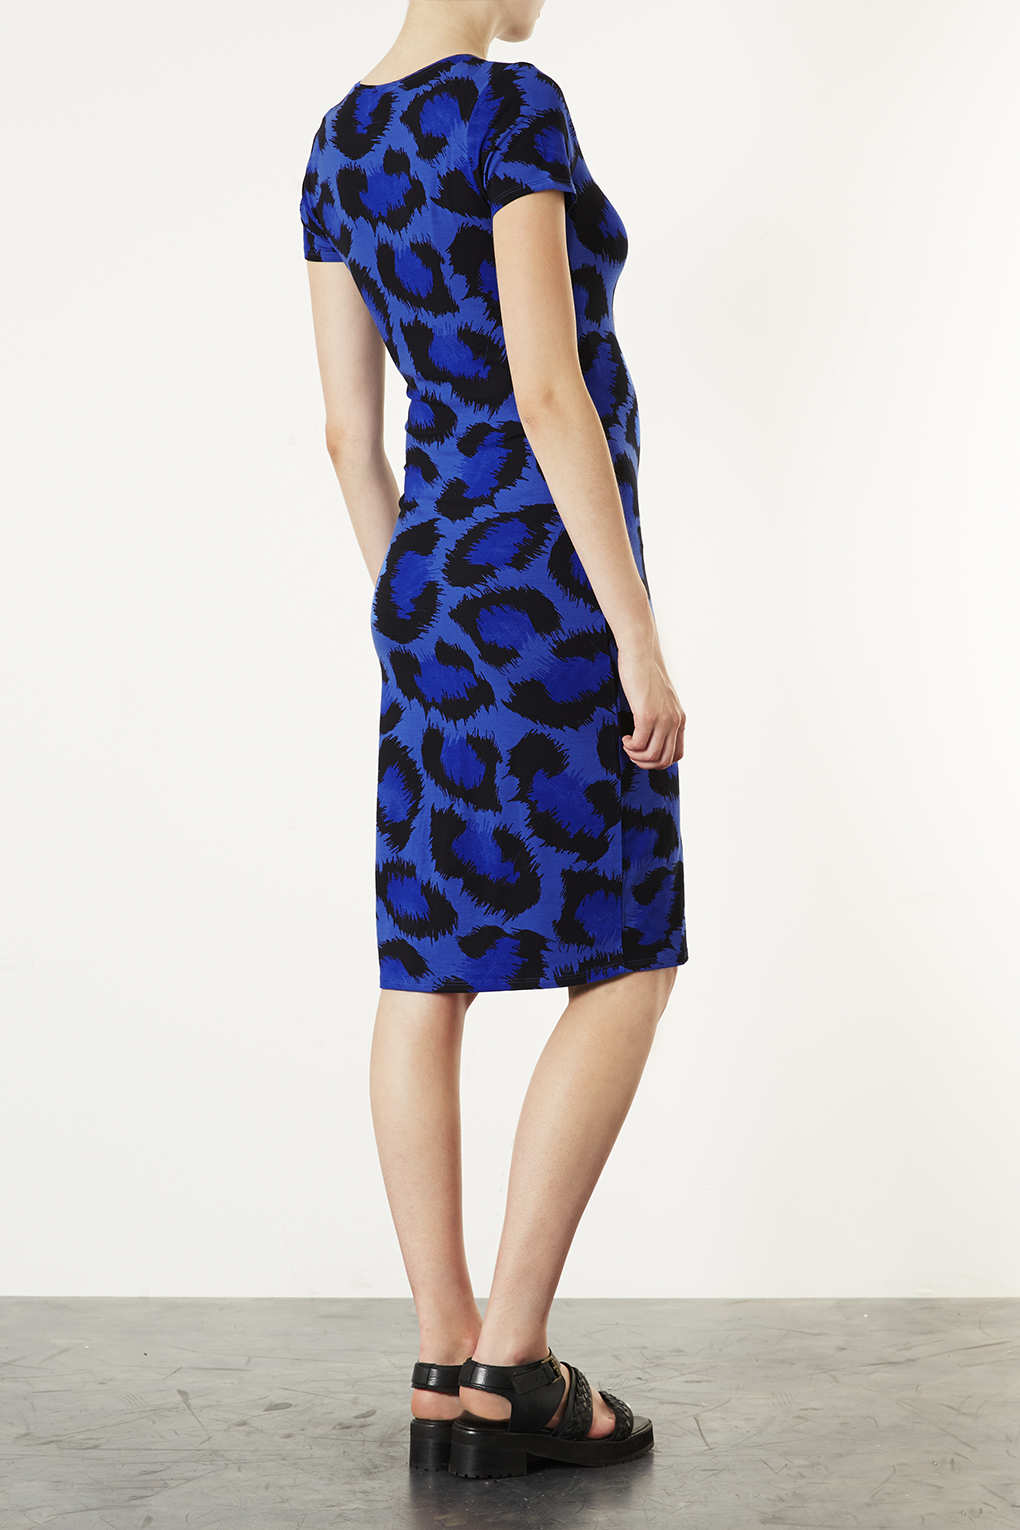 Leopard print bodycon dress topshop